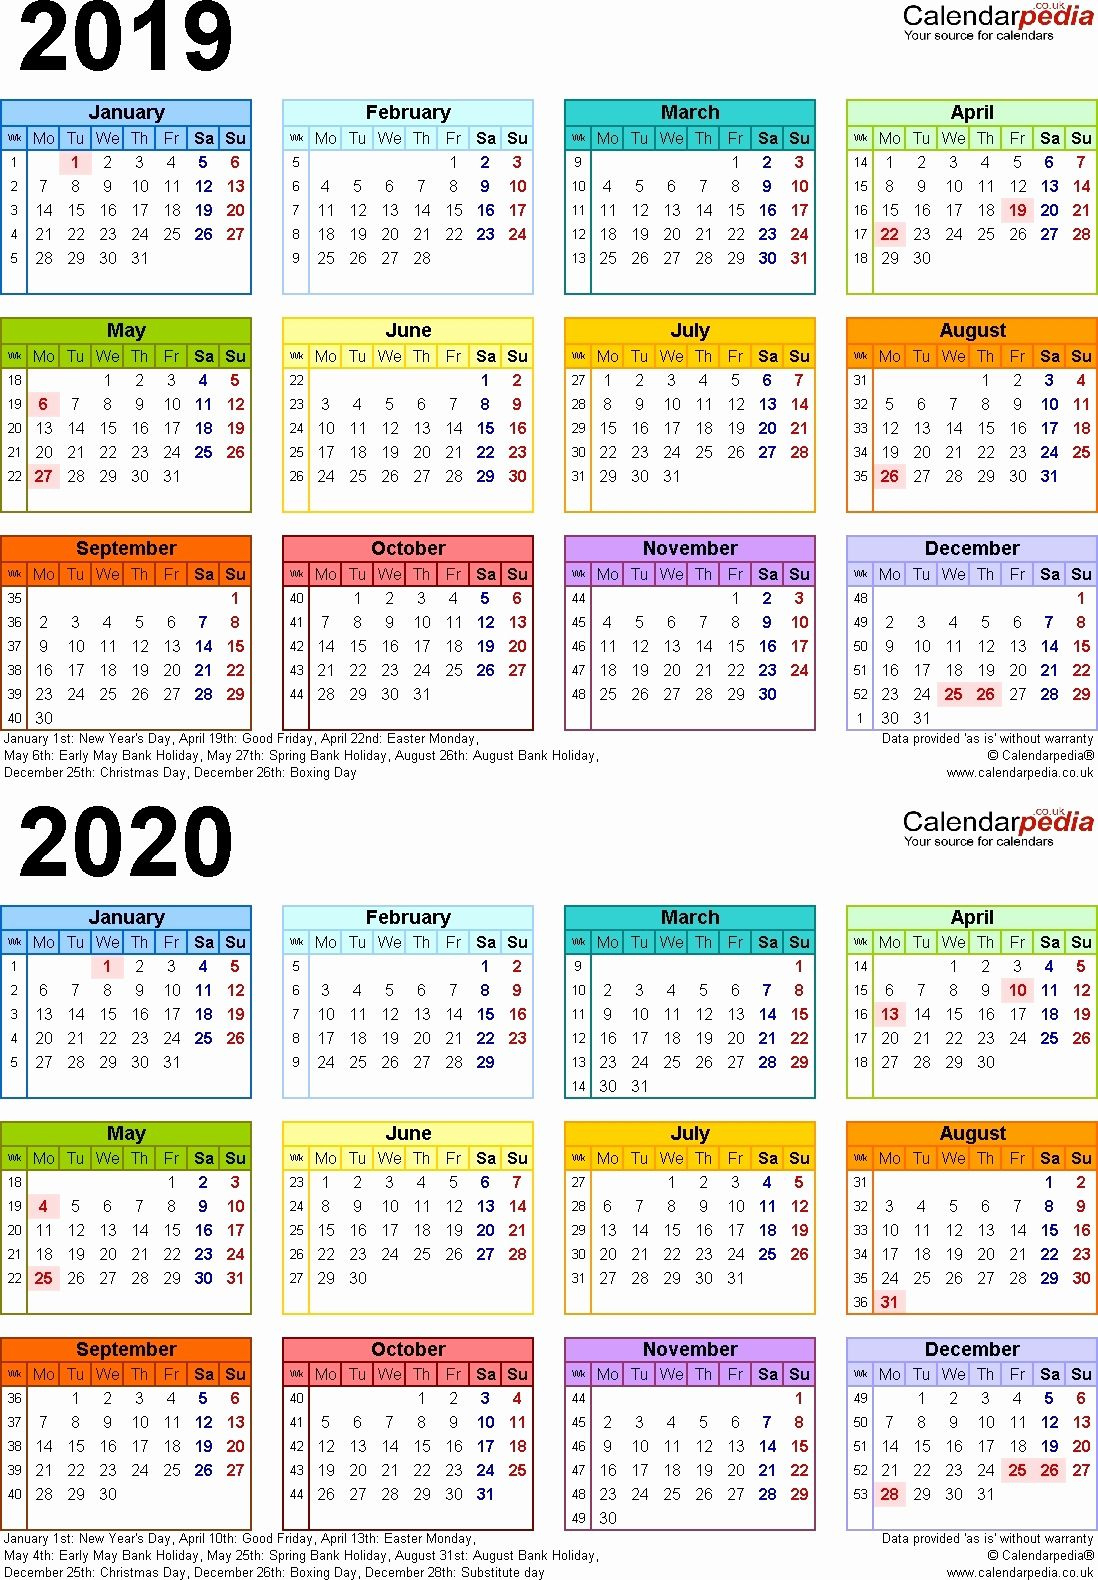 20+ Calendar 2021 Qld - Free Download Printable Calendar December 2021 Calendar Australia